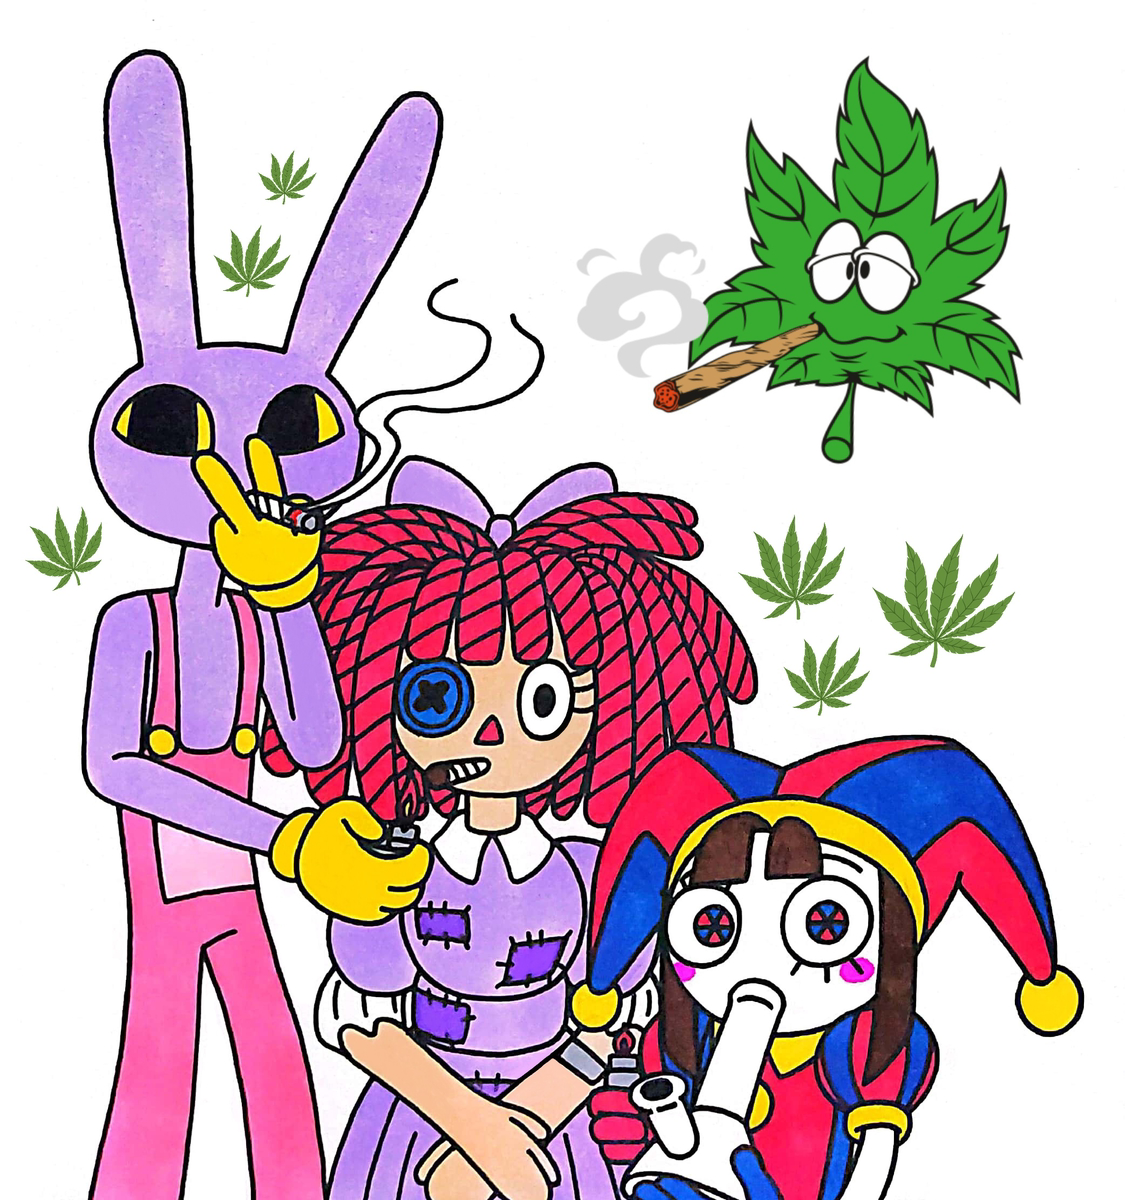 jax ragatha and pomni smoking weed, art by 나까